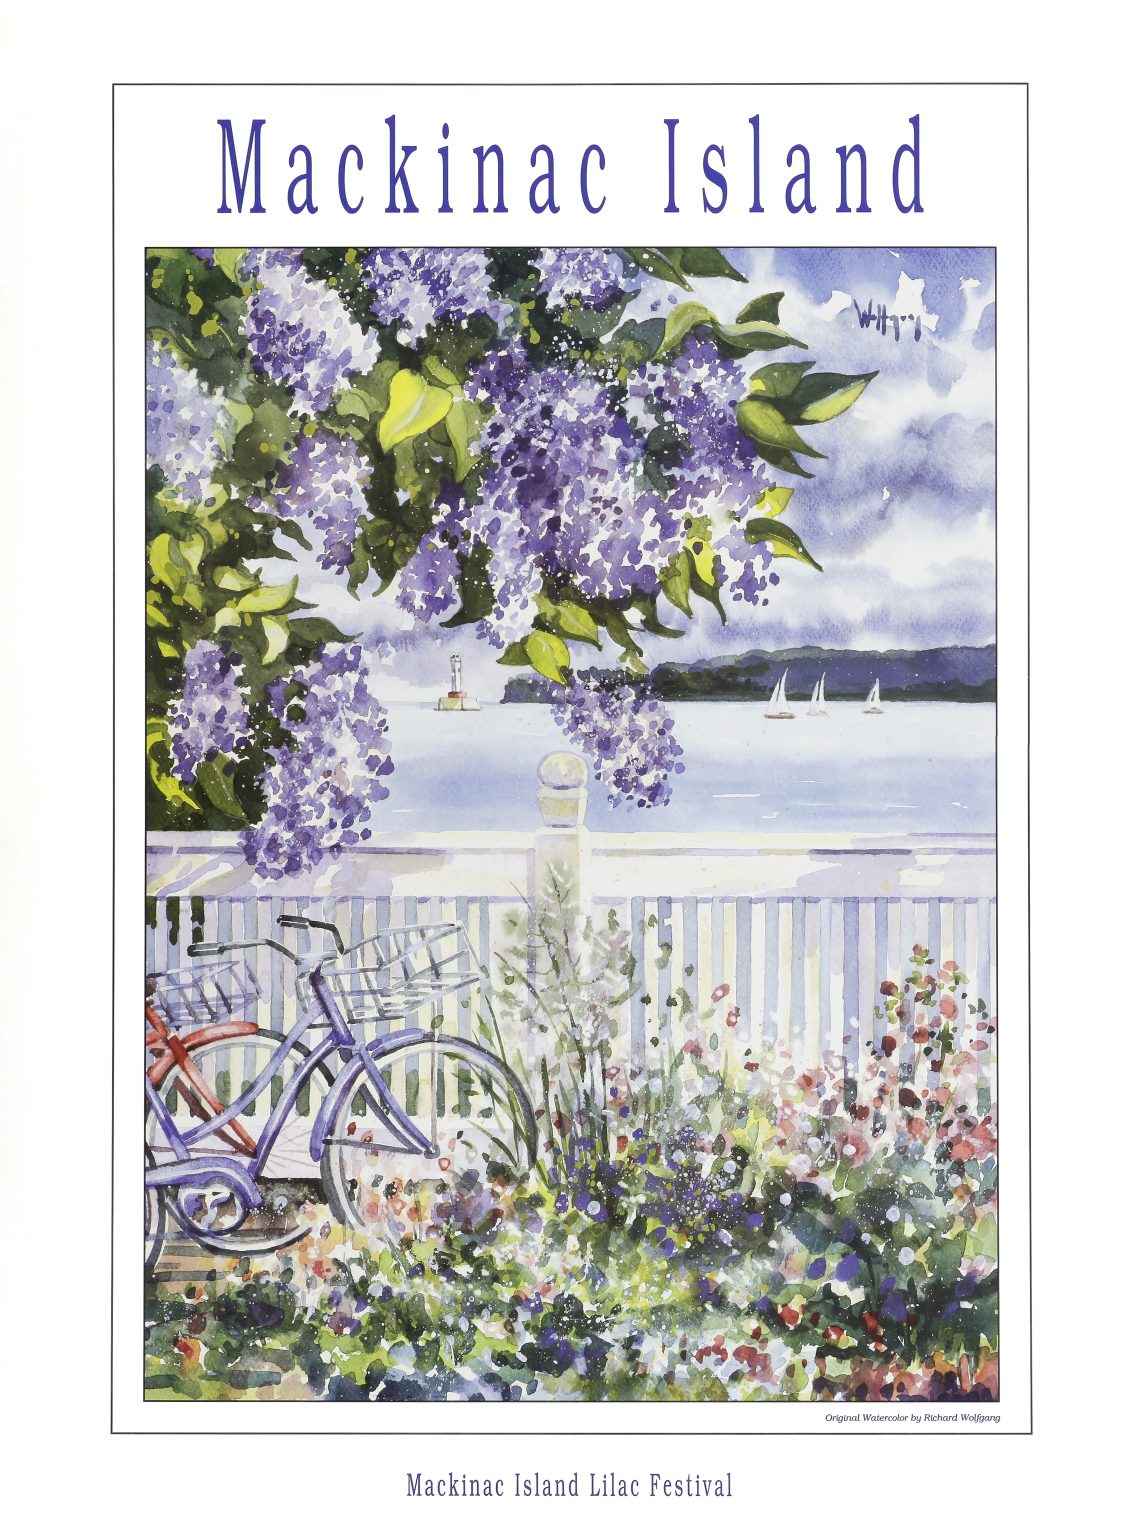 Lilac Festival Poster Collection Display Mackinac Island Tourism Bureau